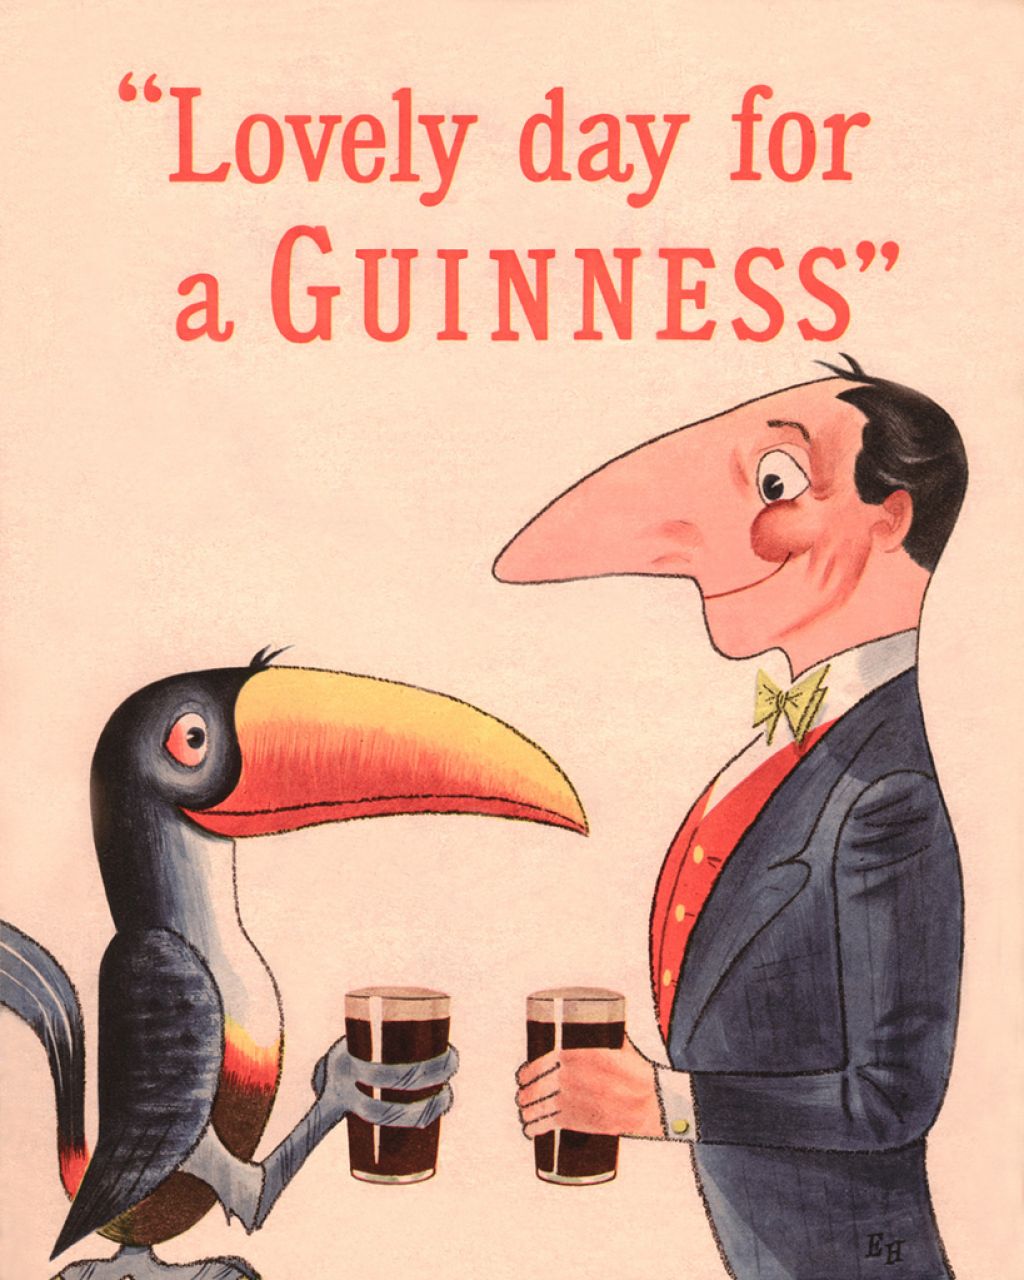 Pivo Guinness